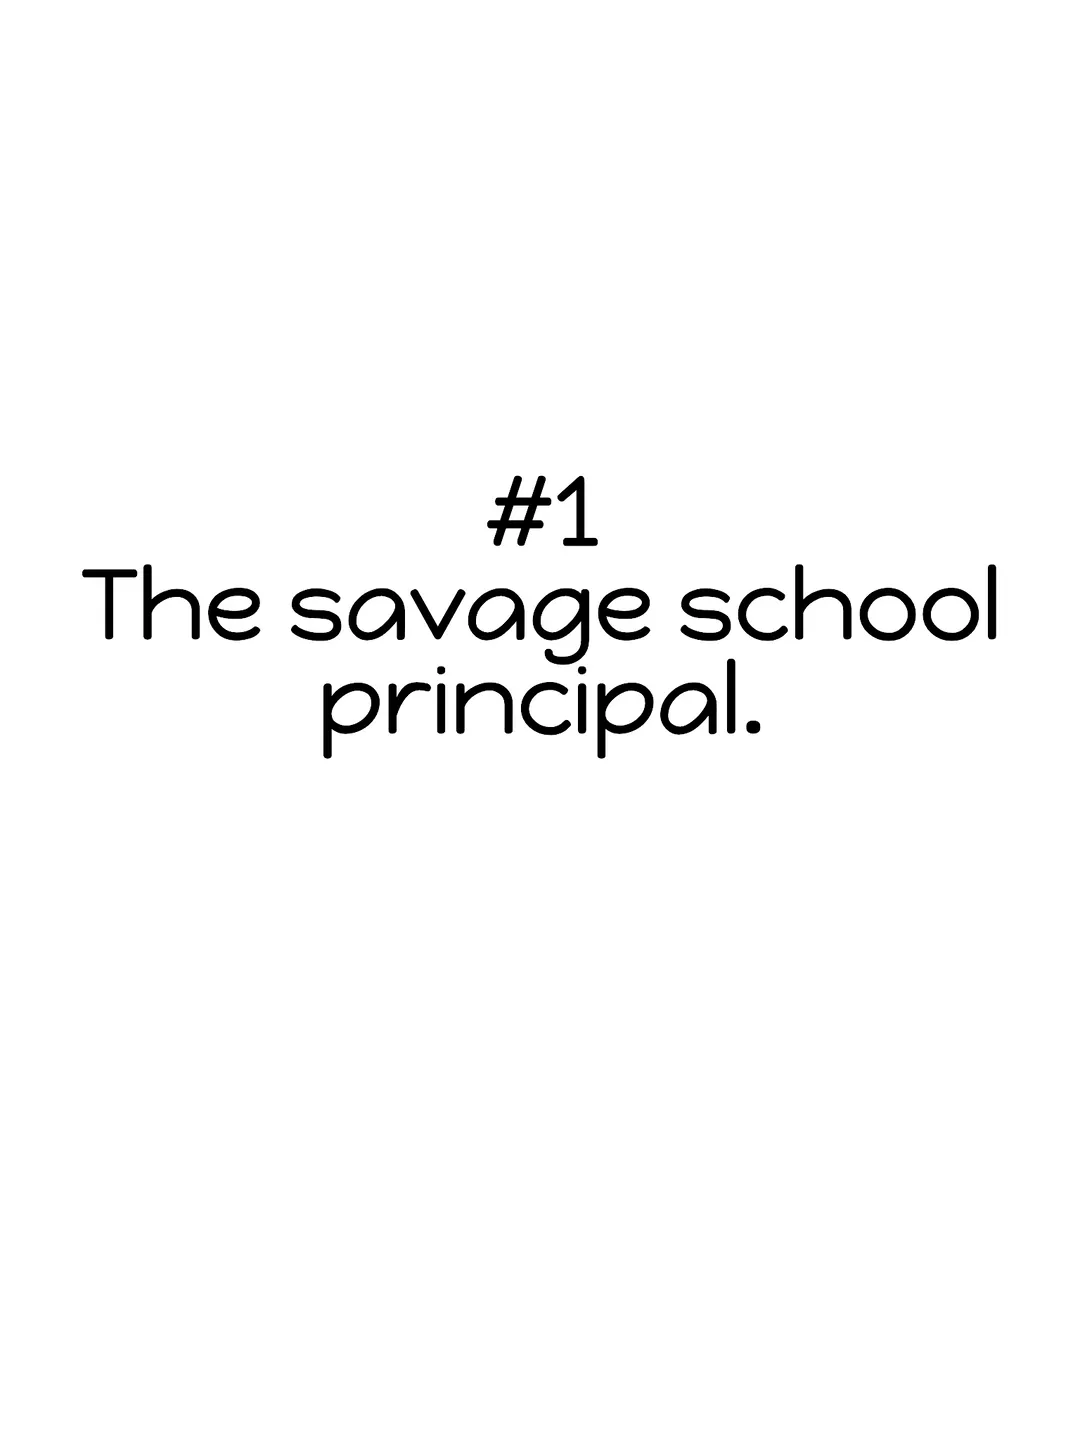 The savage school principal